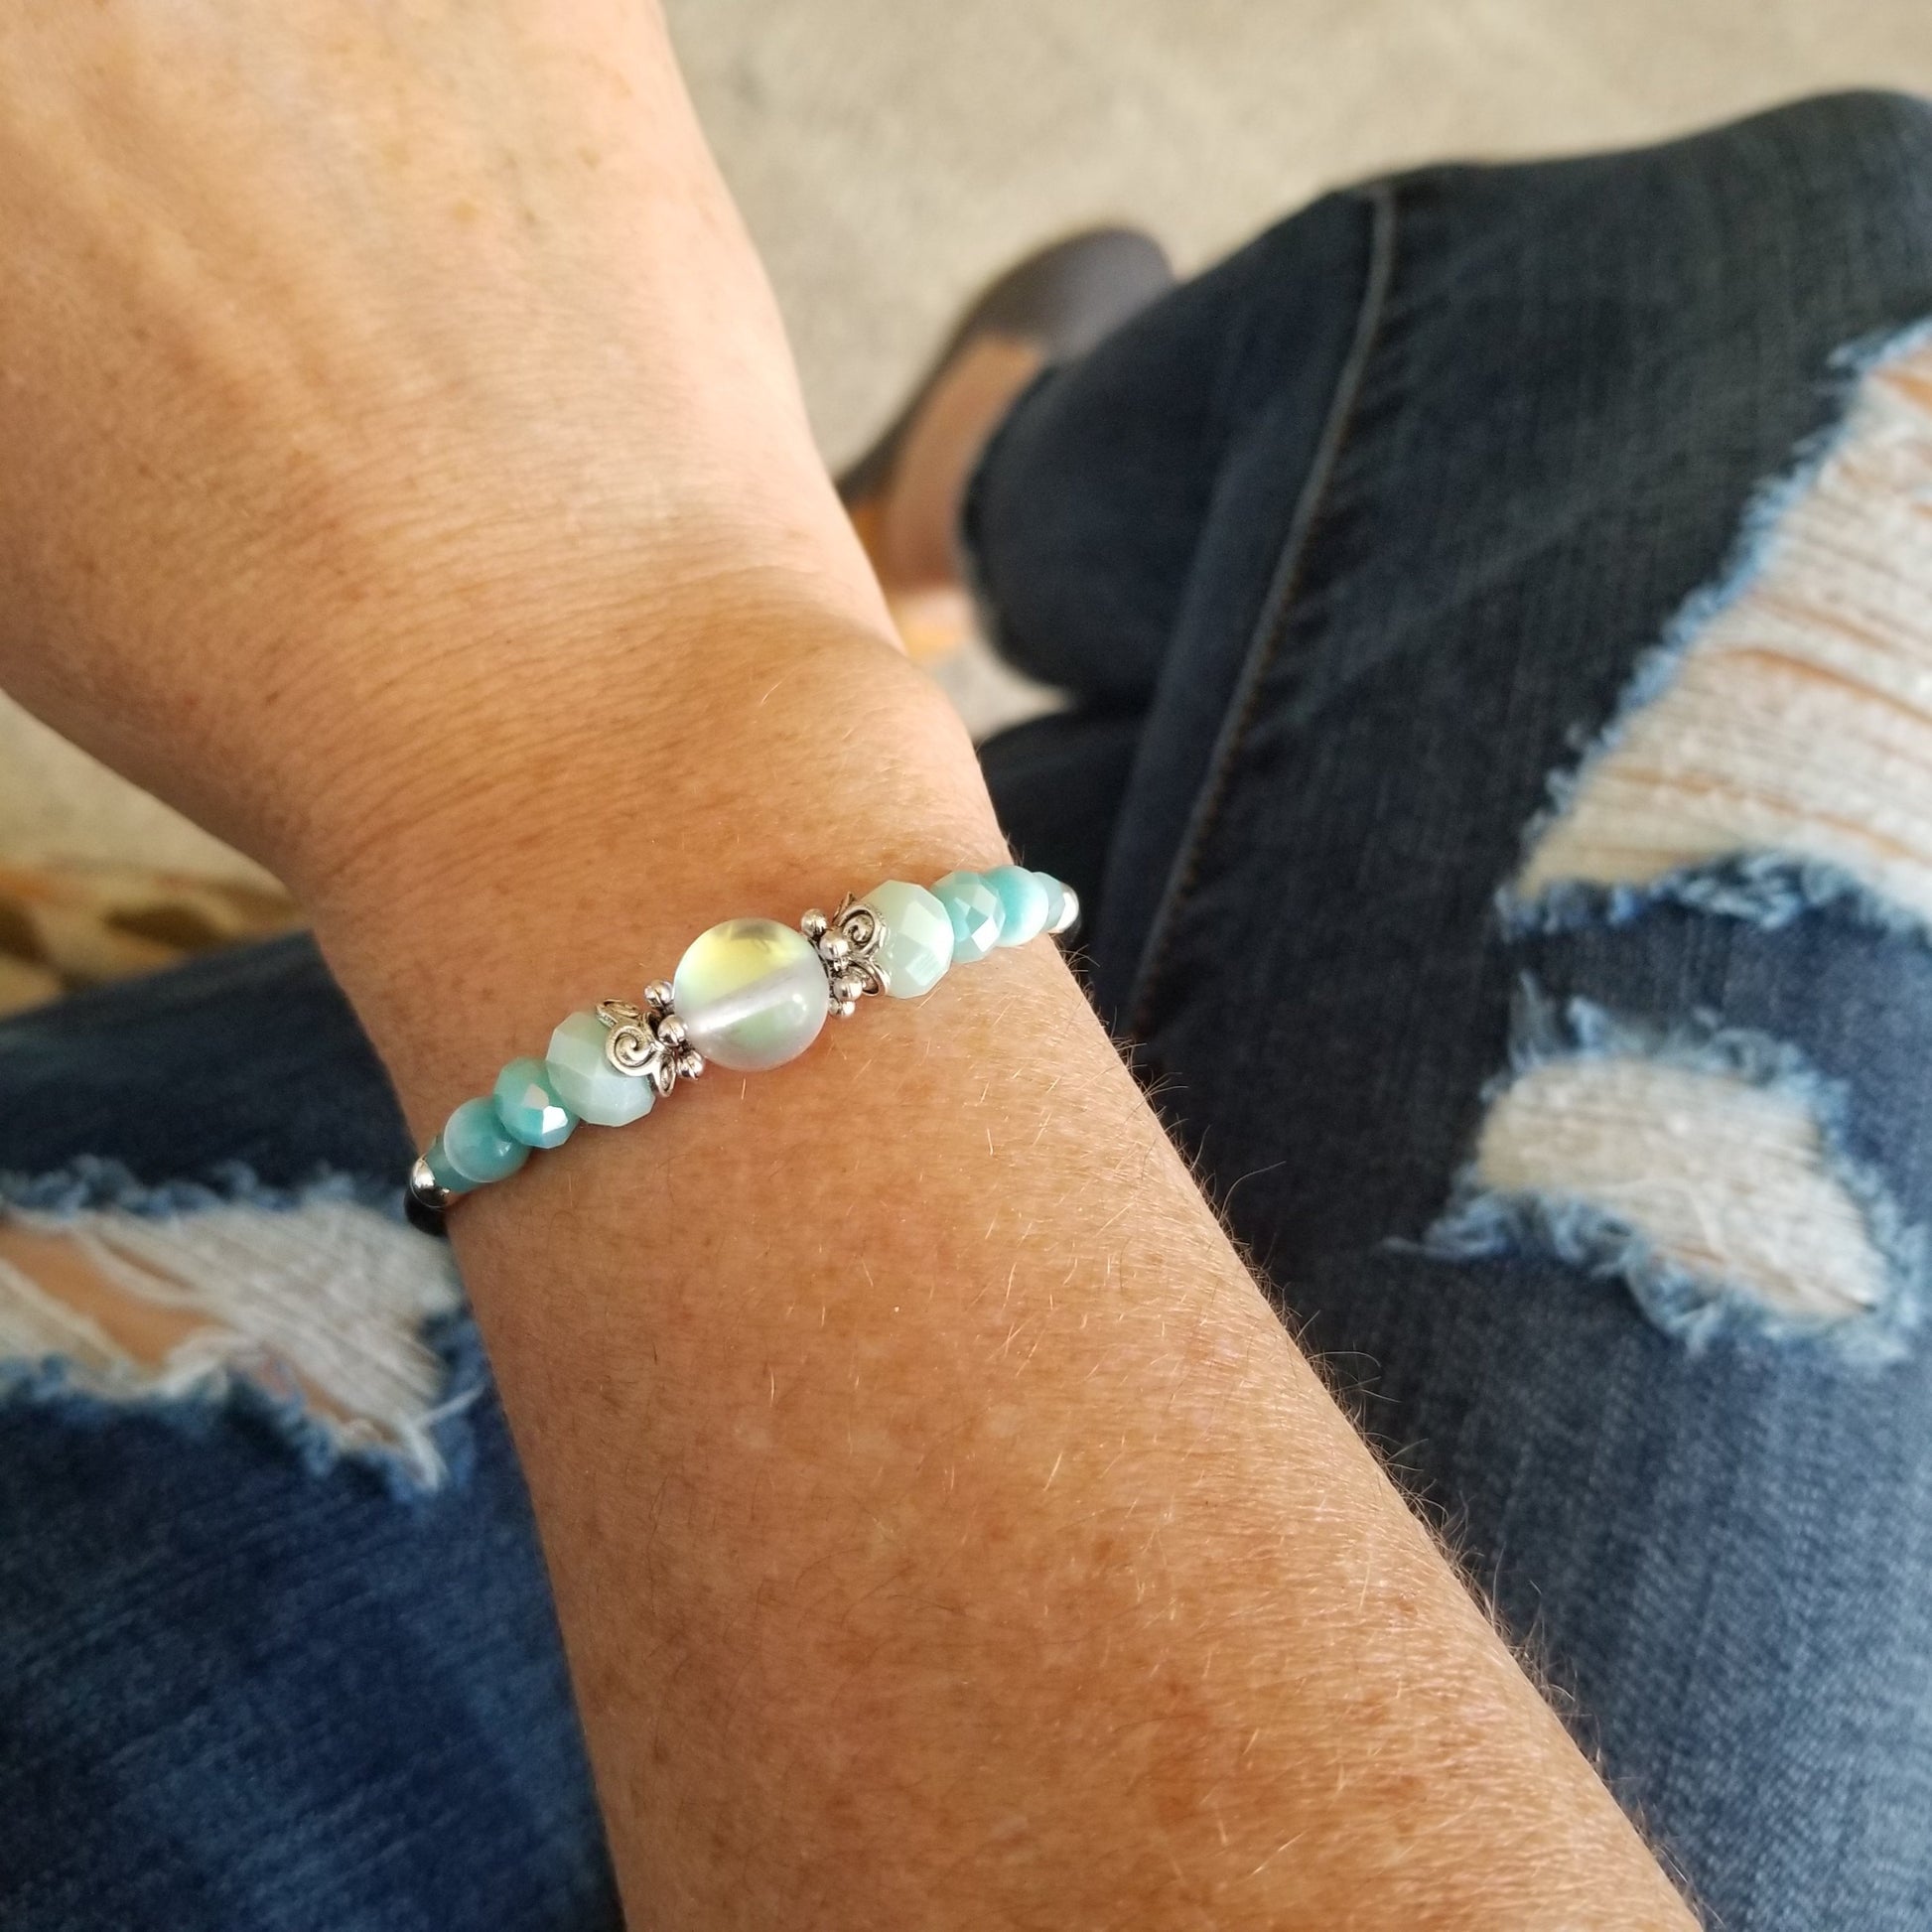 rainbow glass bead with coordinating beads wrap bracelet on wrist